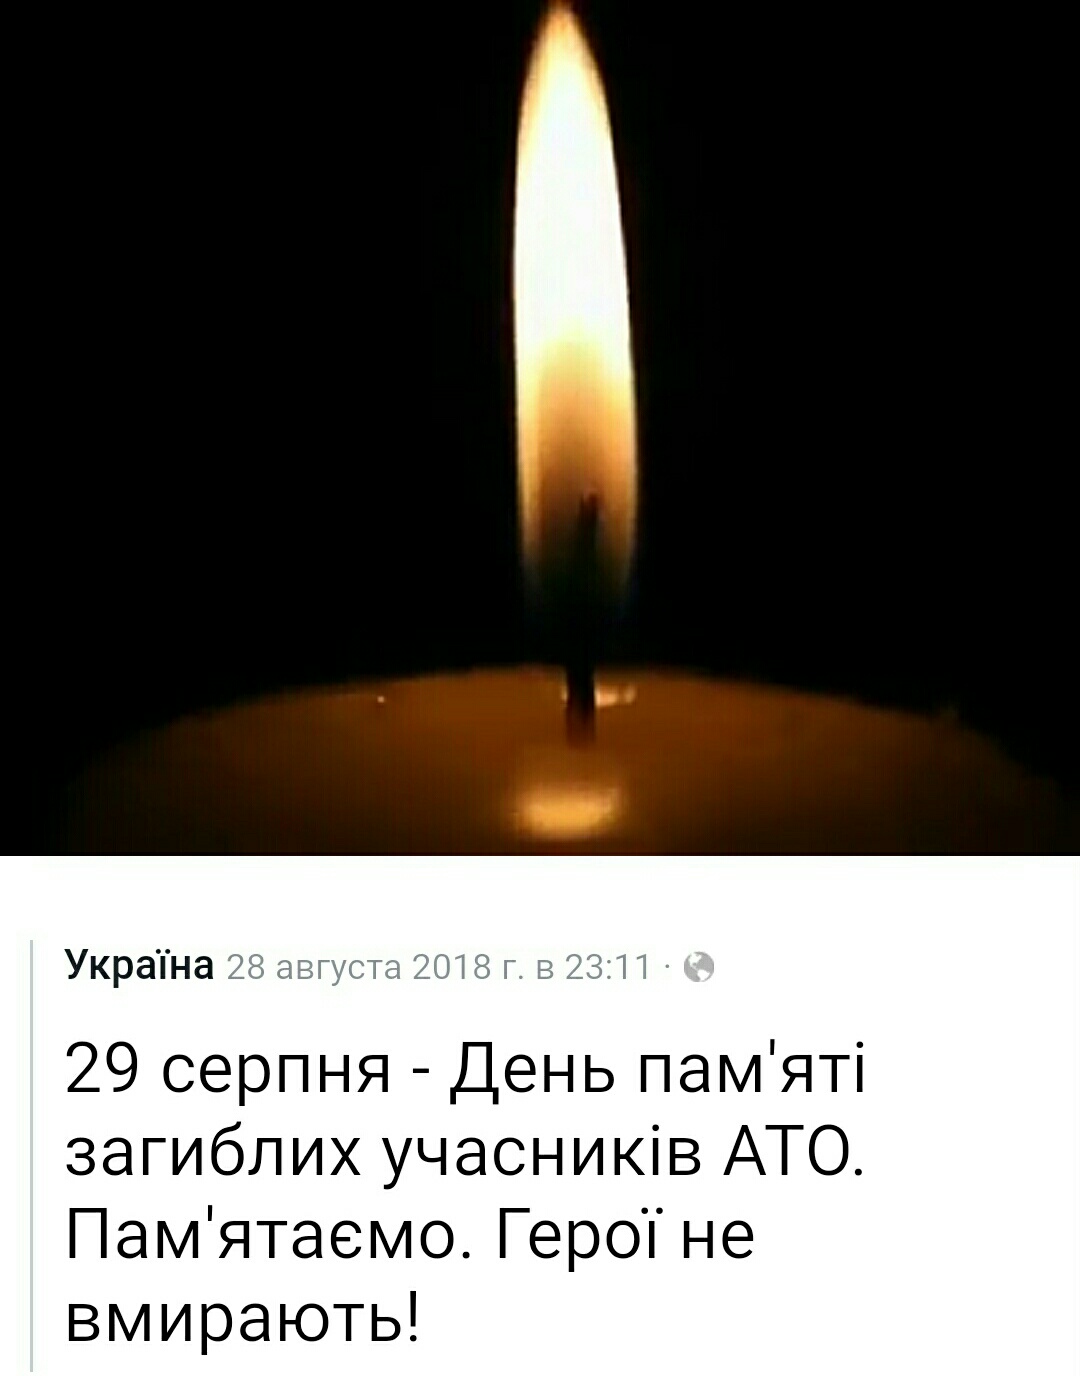 Вечная память погибшим за Украину - S90829-213443(1).jpg